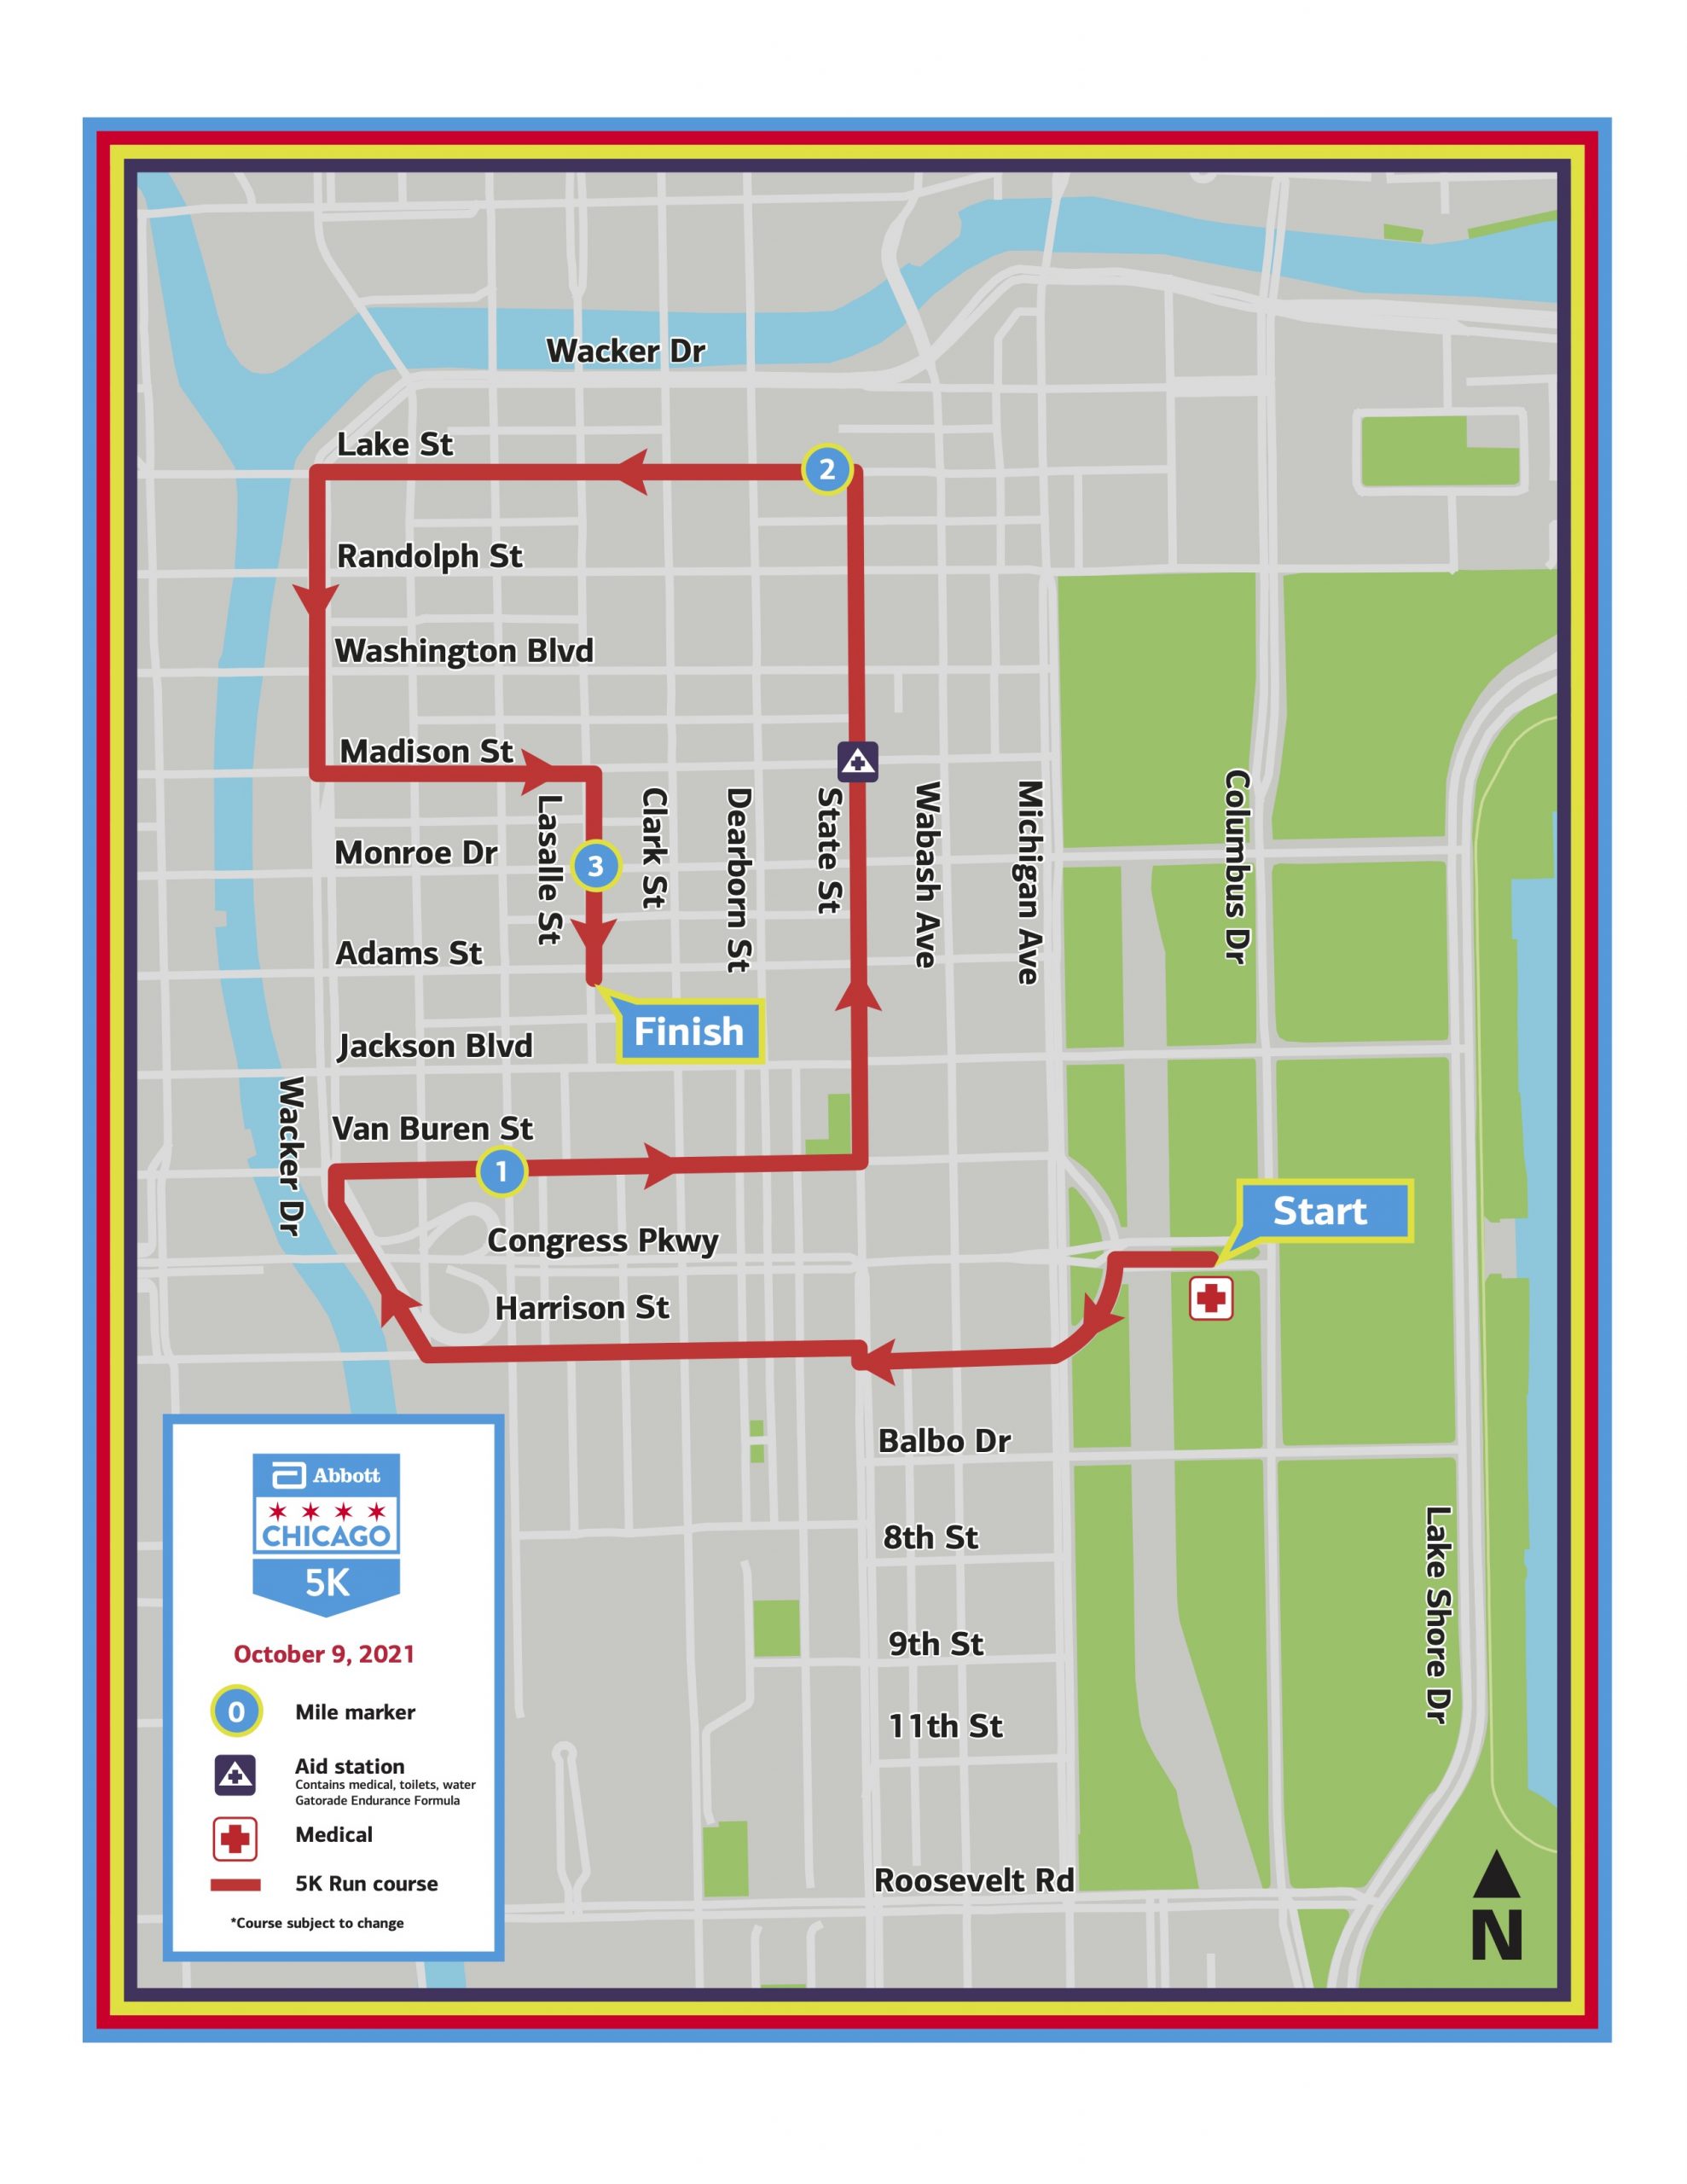 44th Chicago Marathon (Bank of America Chicago Marathon) 2022. Chicago